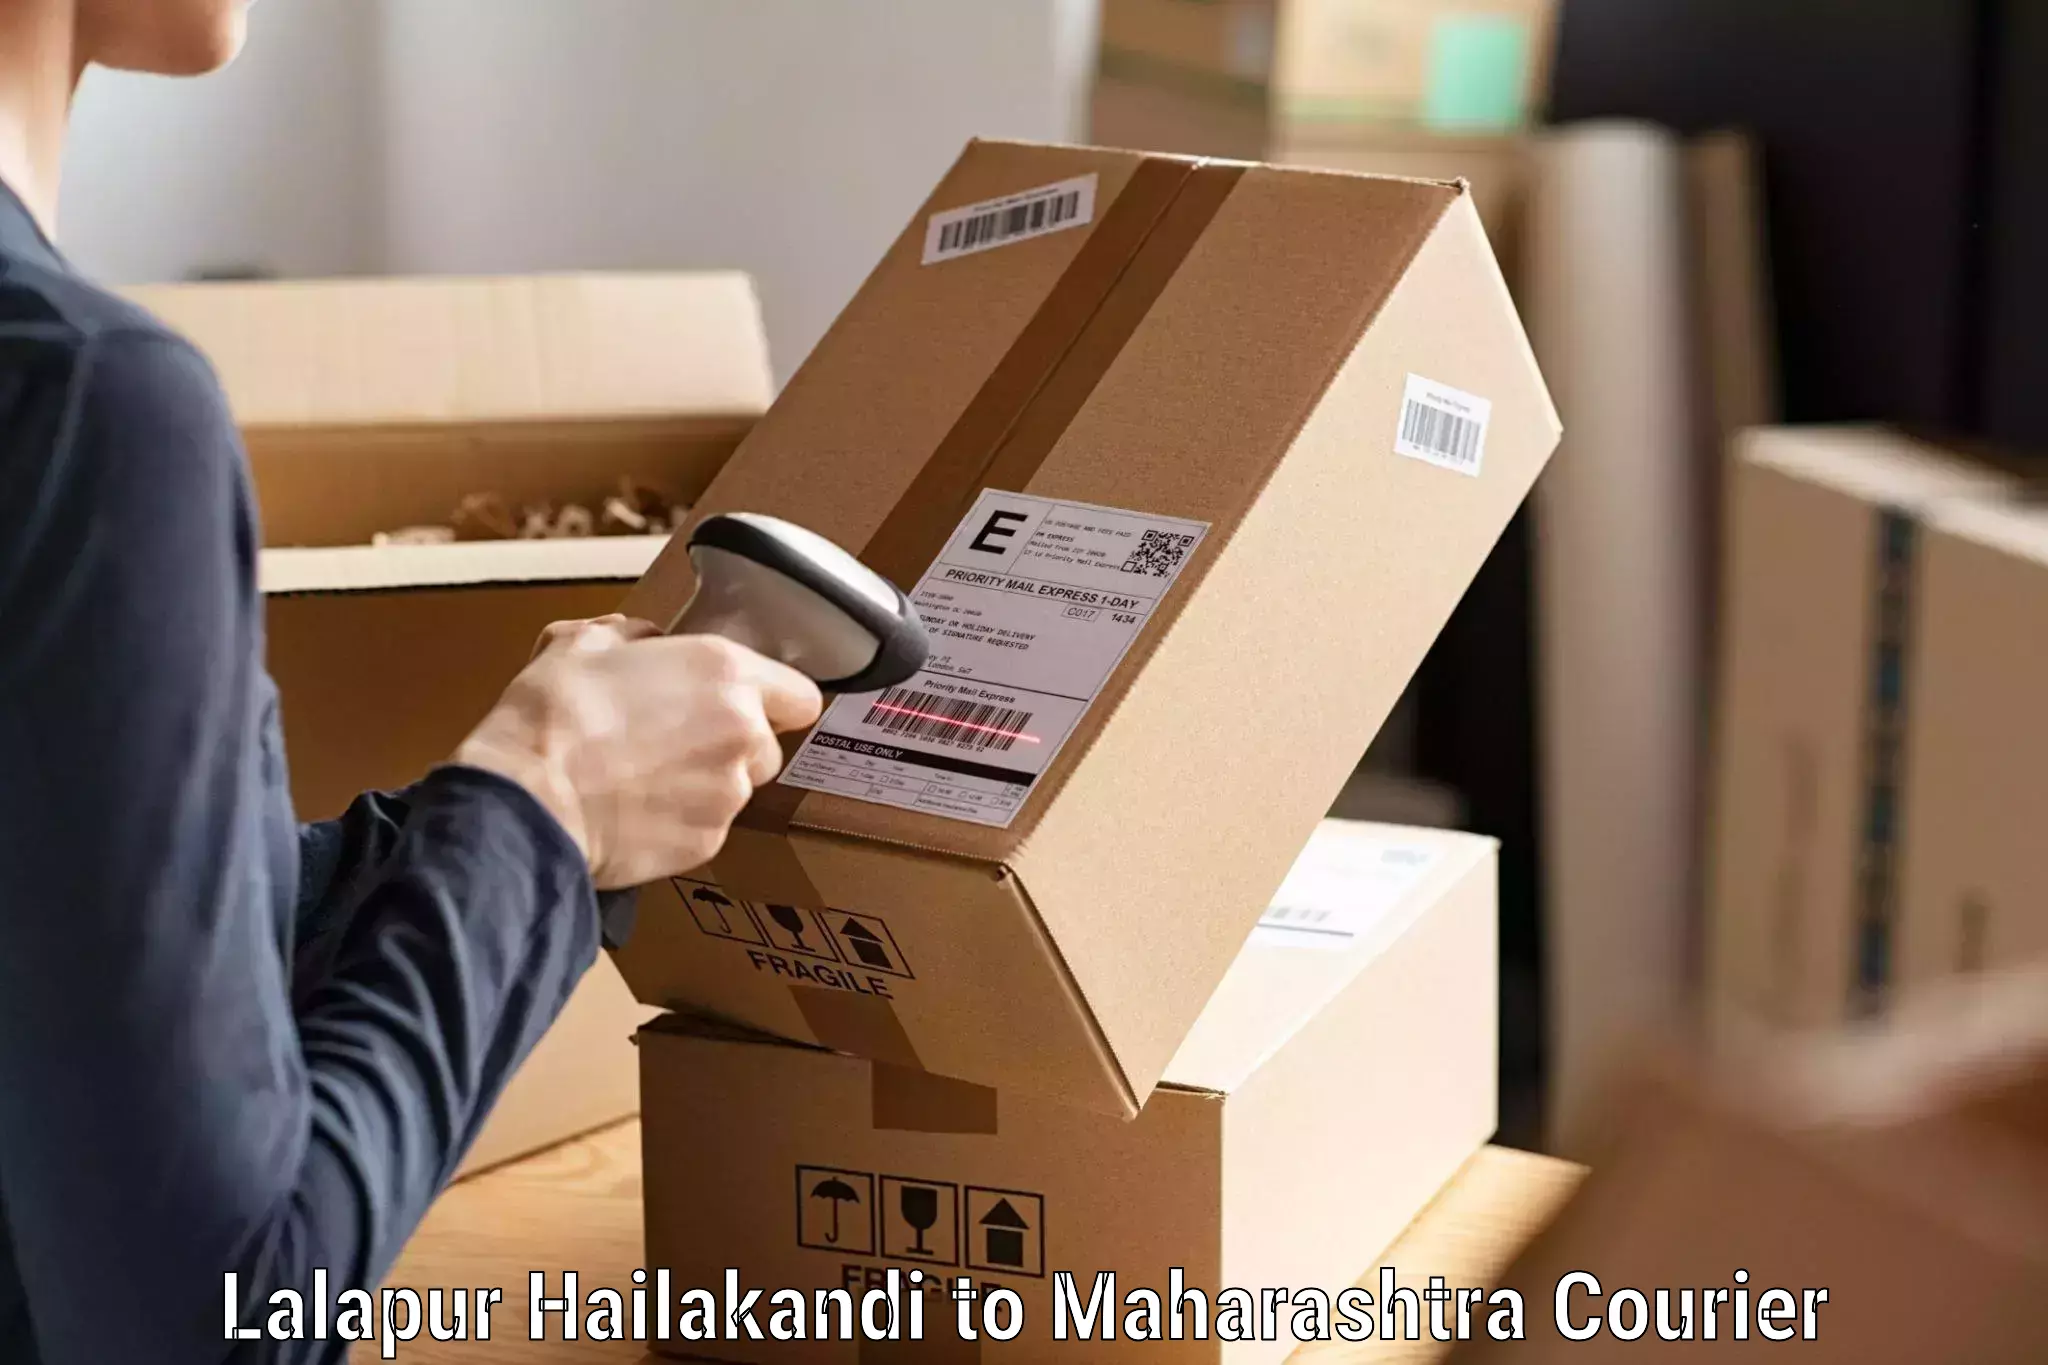 Professional courier handling Lalapur Hailakandi to Roha